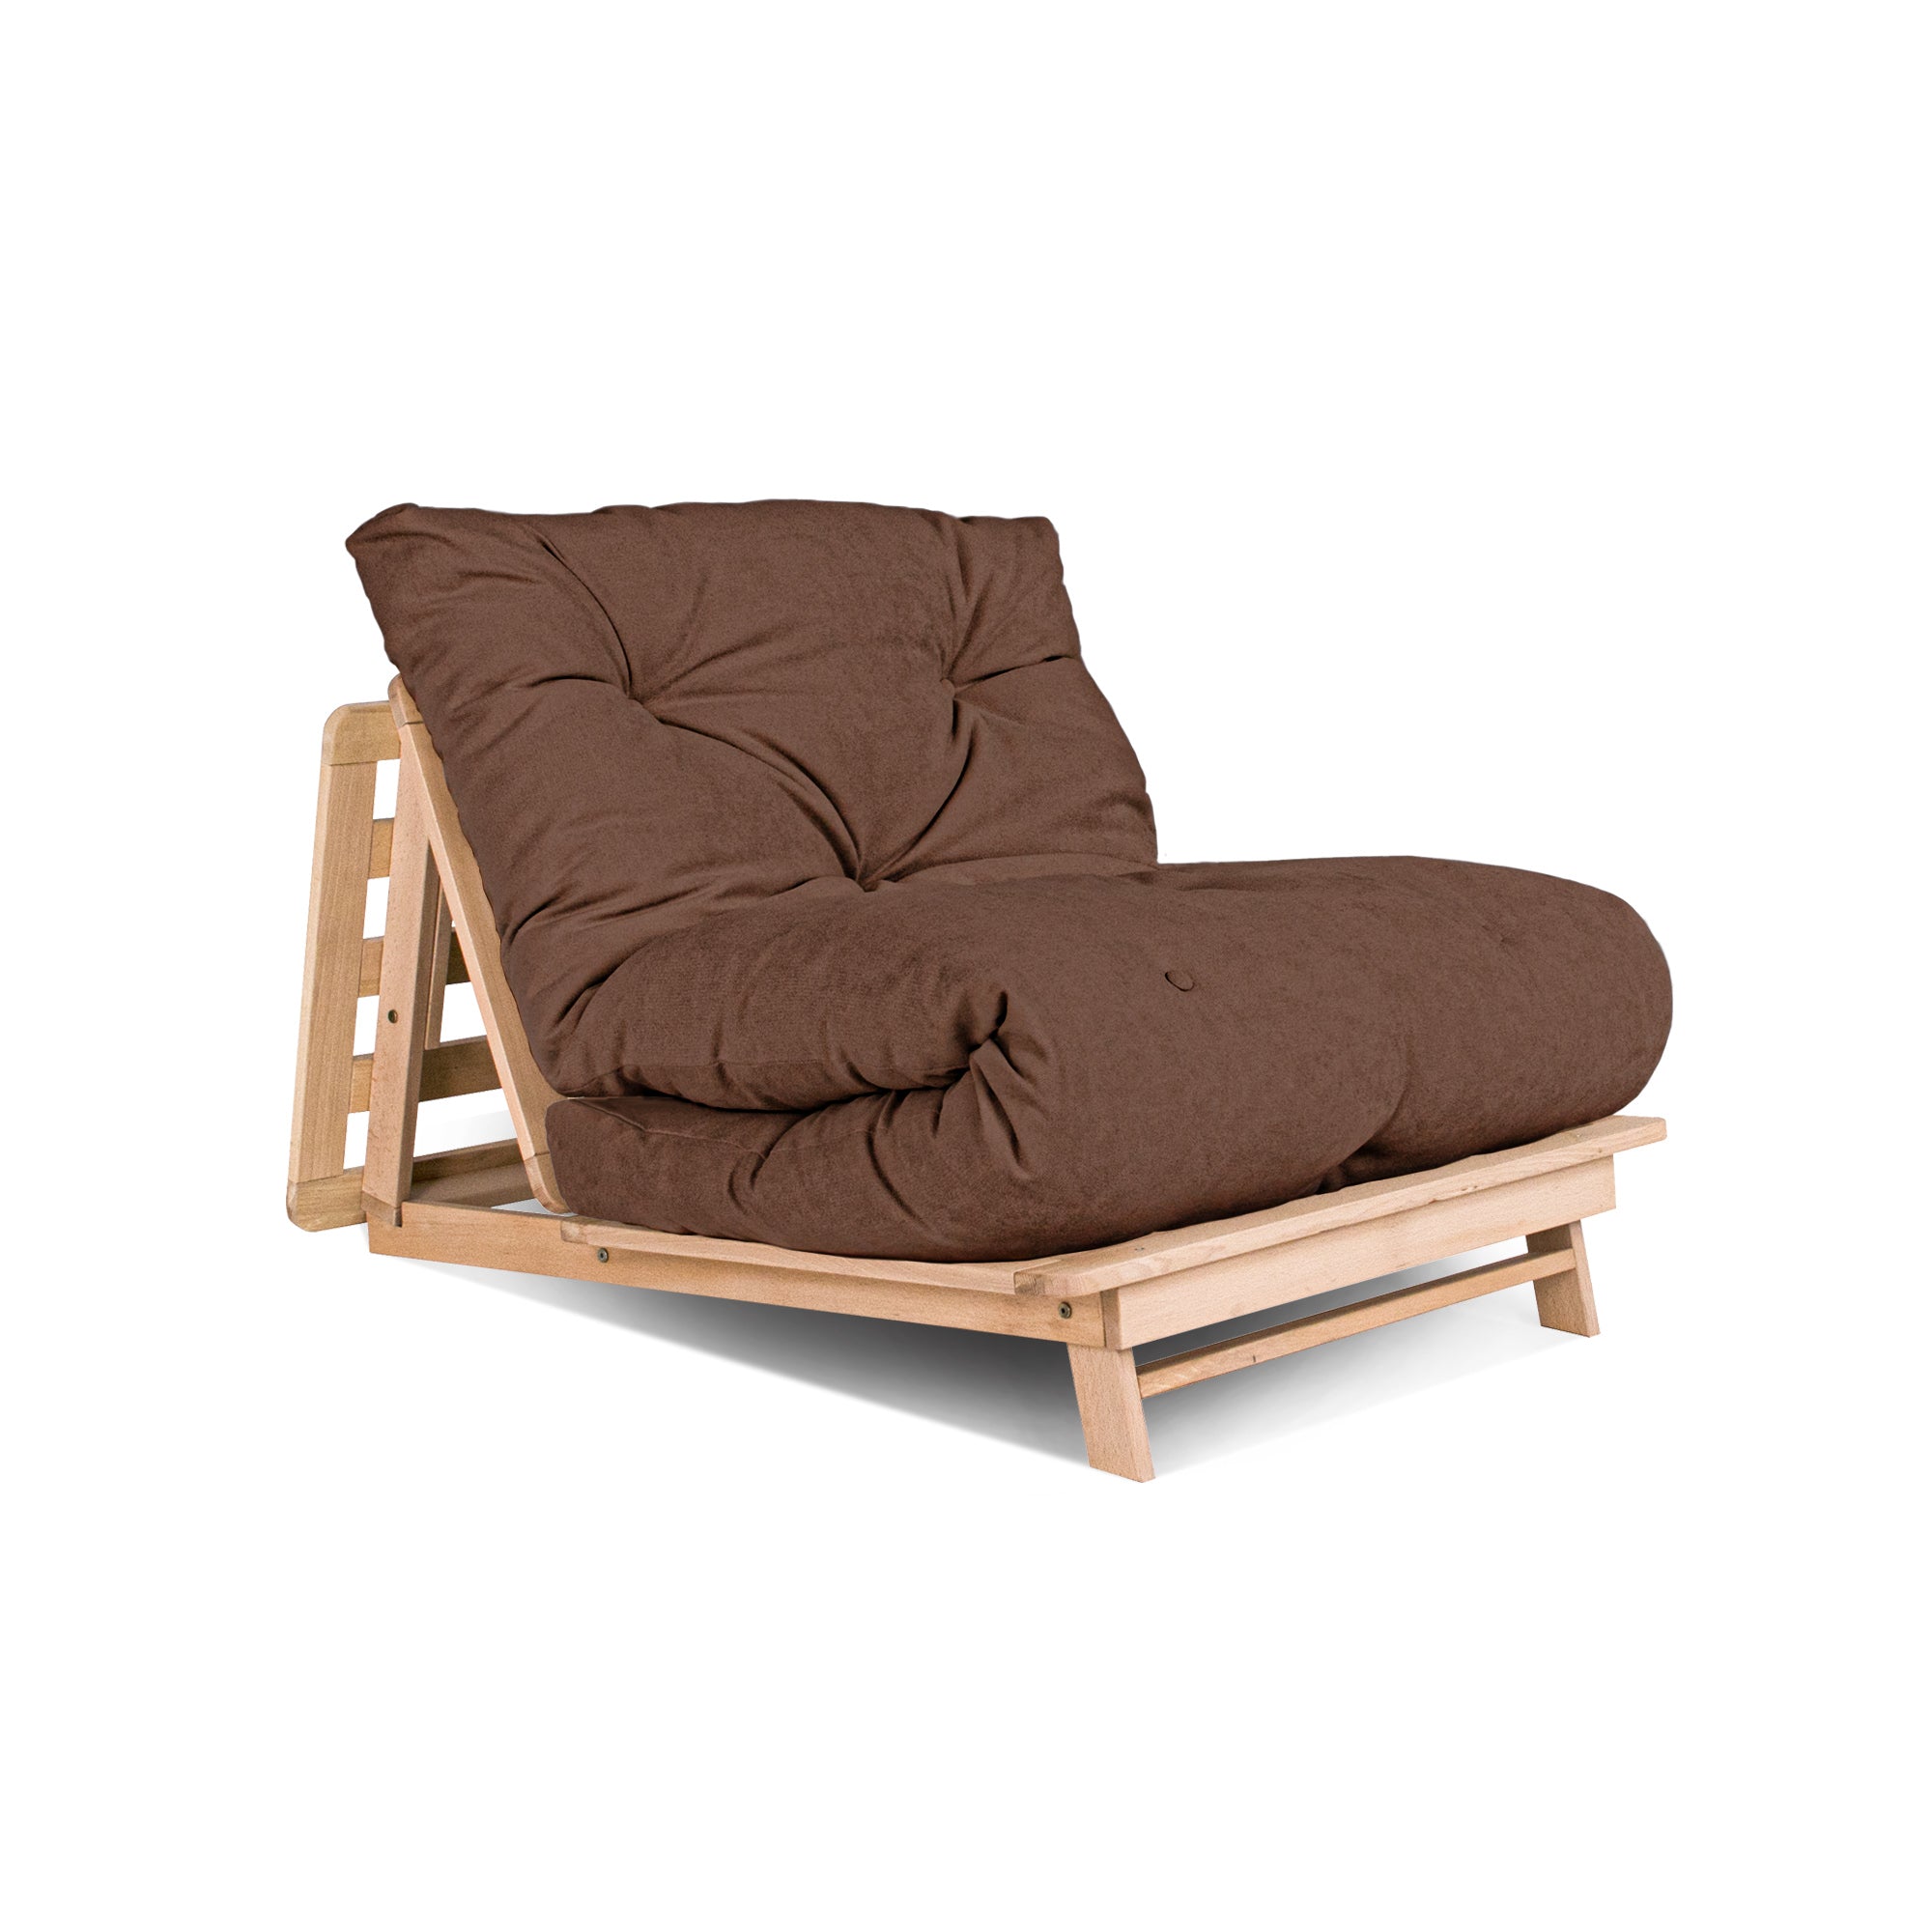 LAYTI-90 Futon Chair, Beech Wood Frame, Natural Colour-brown fabric